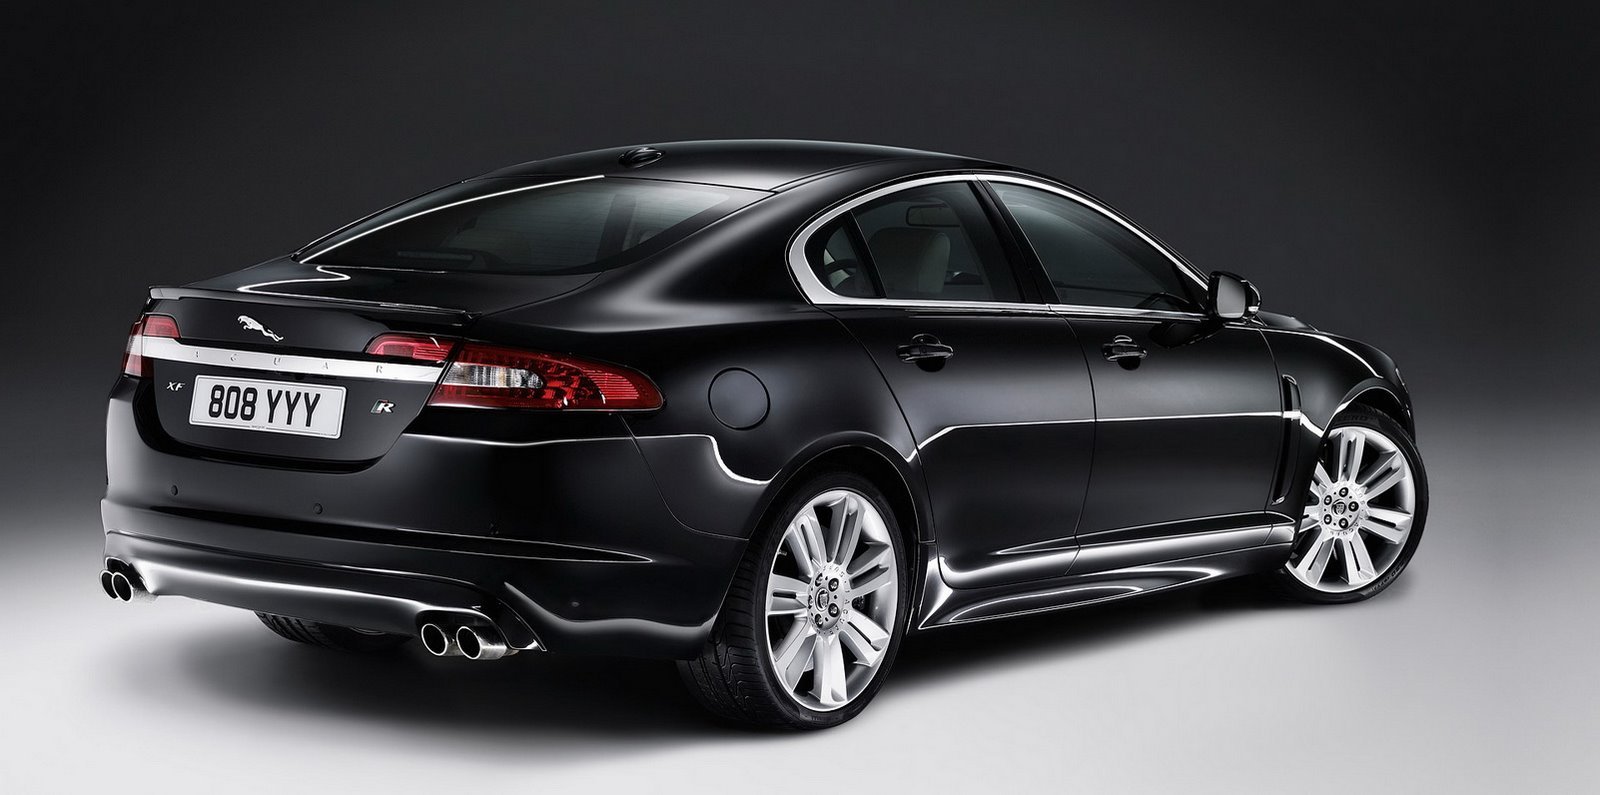 SPORTS CARS: Jaguar XFR 2013 Price, review, features ...